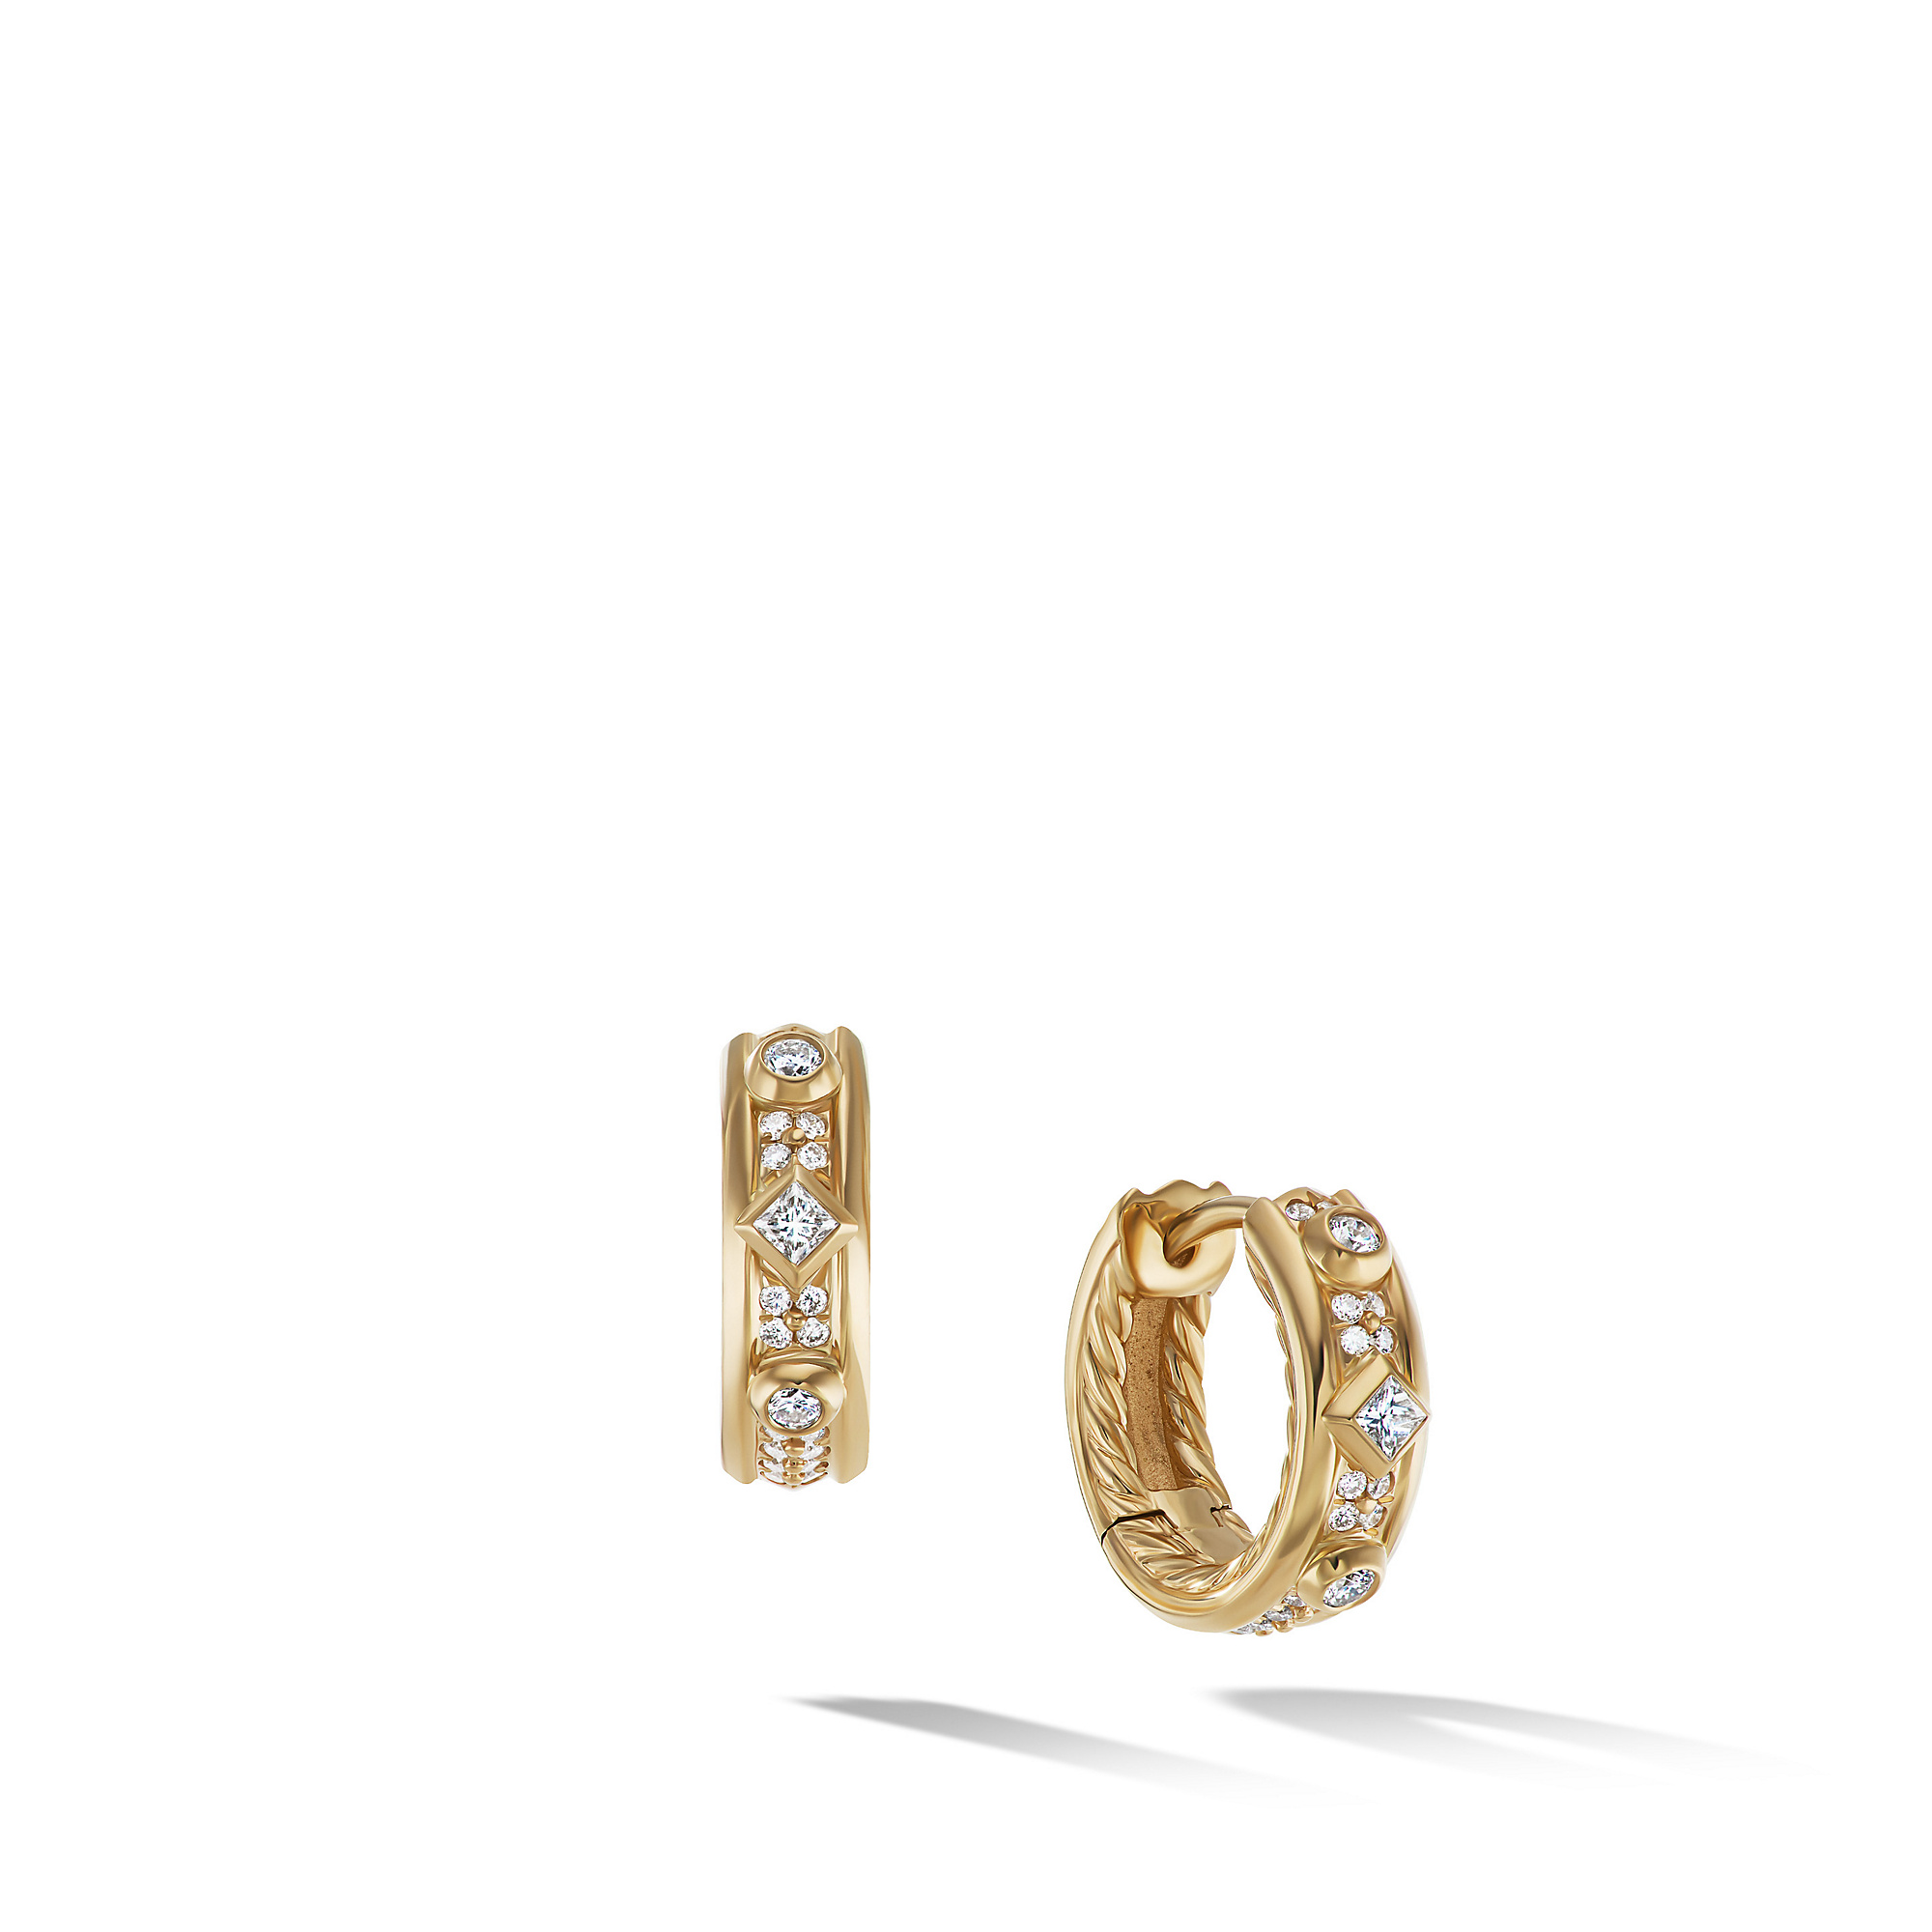 Modern Renaissance Huggie Hoop Earrings in 18K Yellow Gold with Full Pave Diamonds